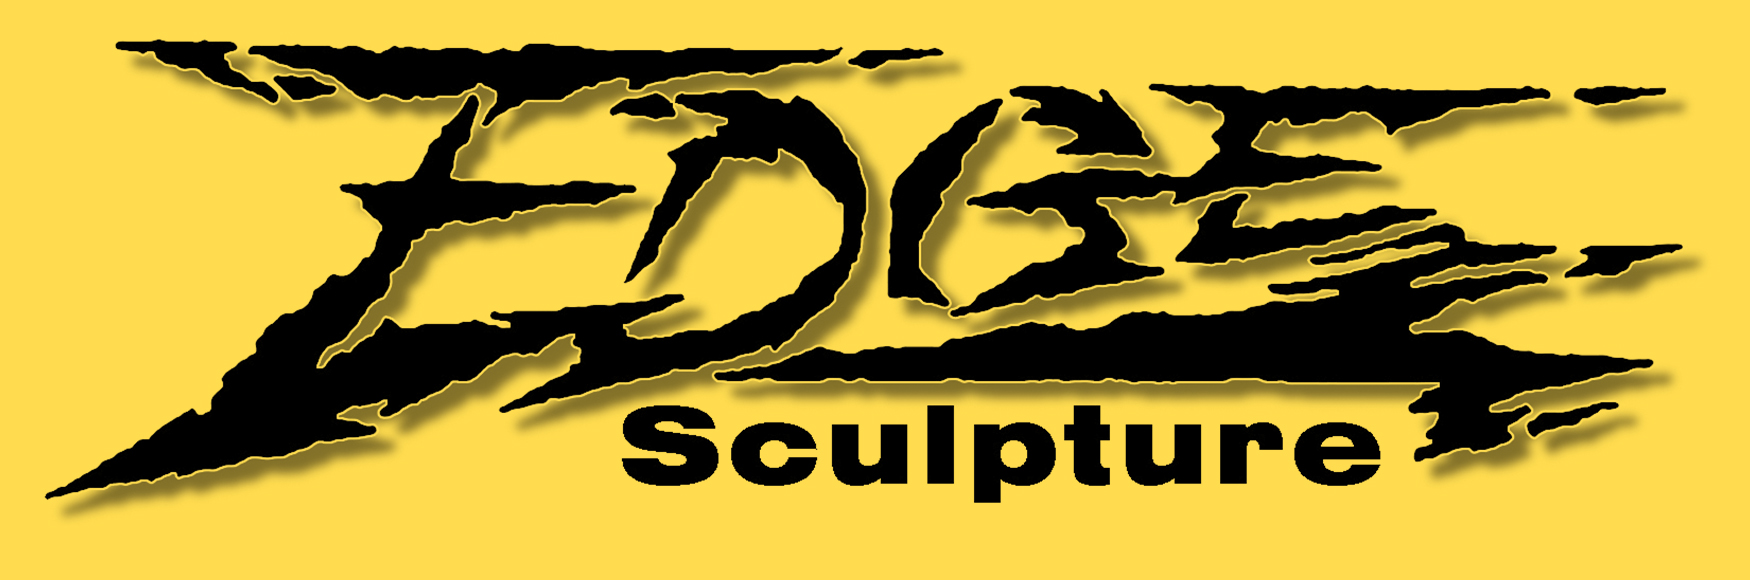 Edge Sculpture Logo Yellow